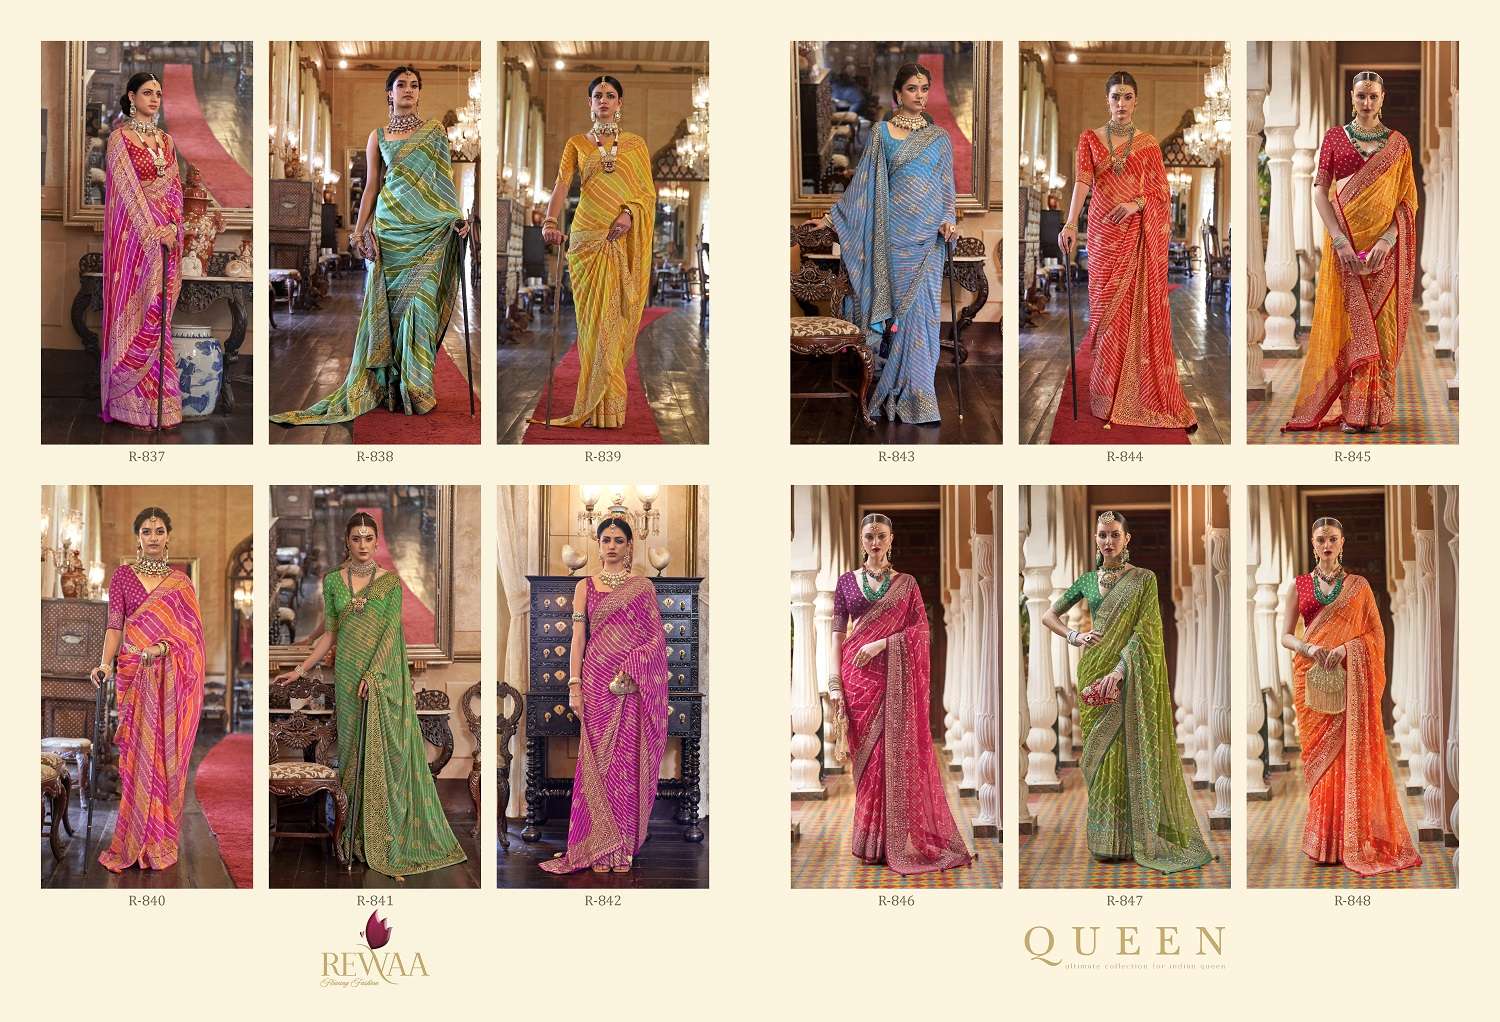 Rewaa Queen Exclusive Designer Georgette Saree Wholesale catalog